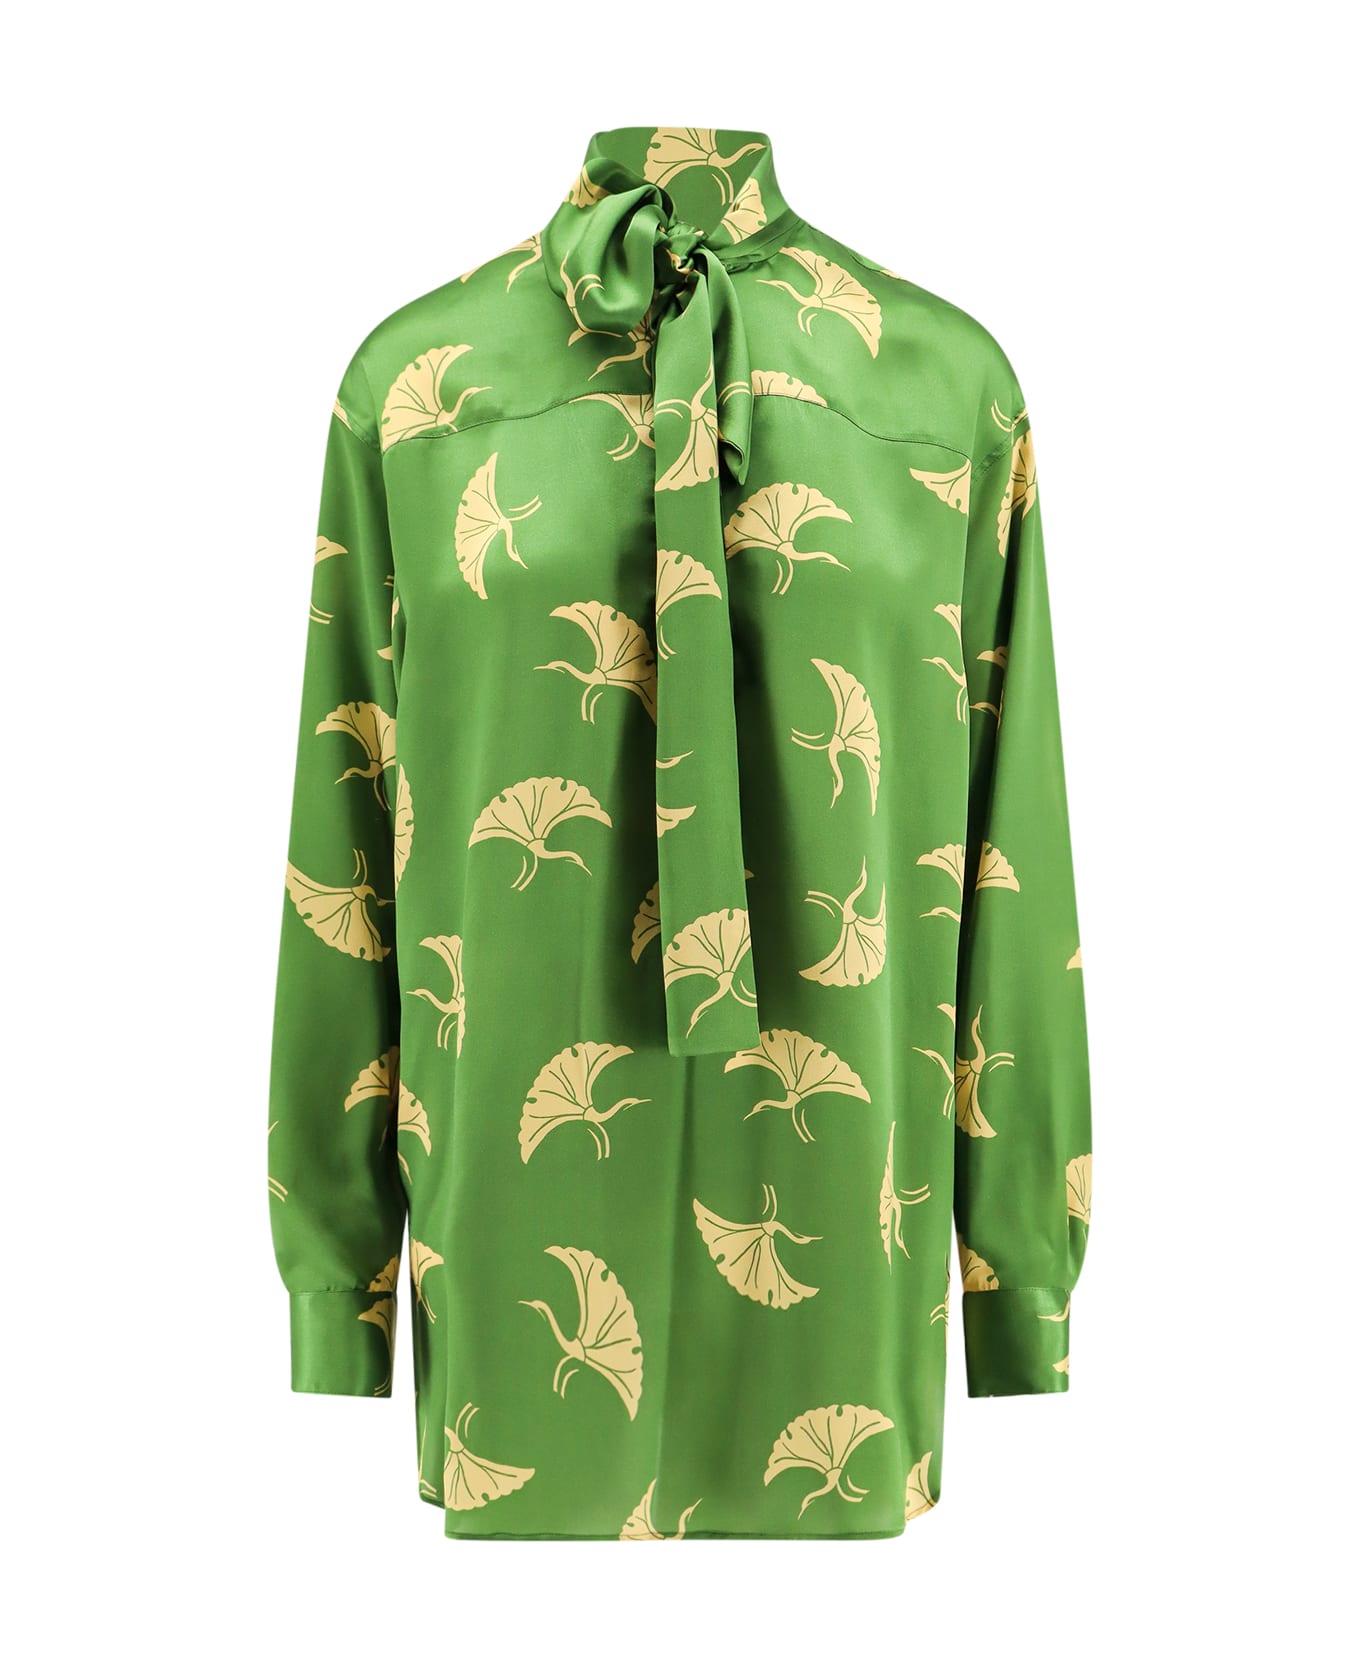 Dries Van Noten Shirt - Green